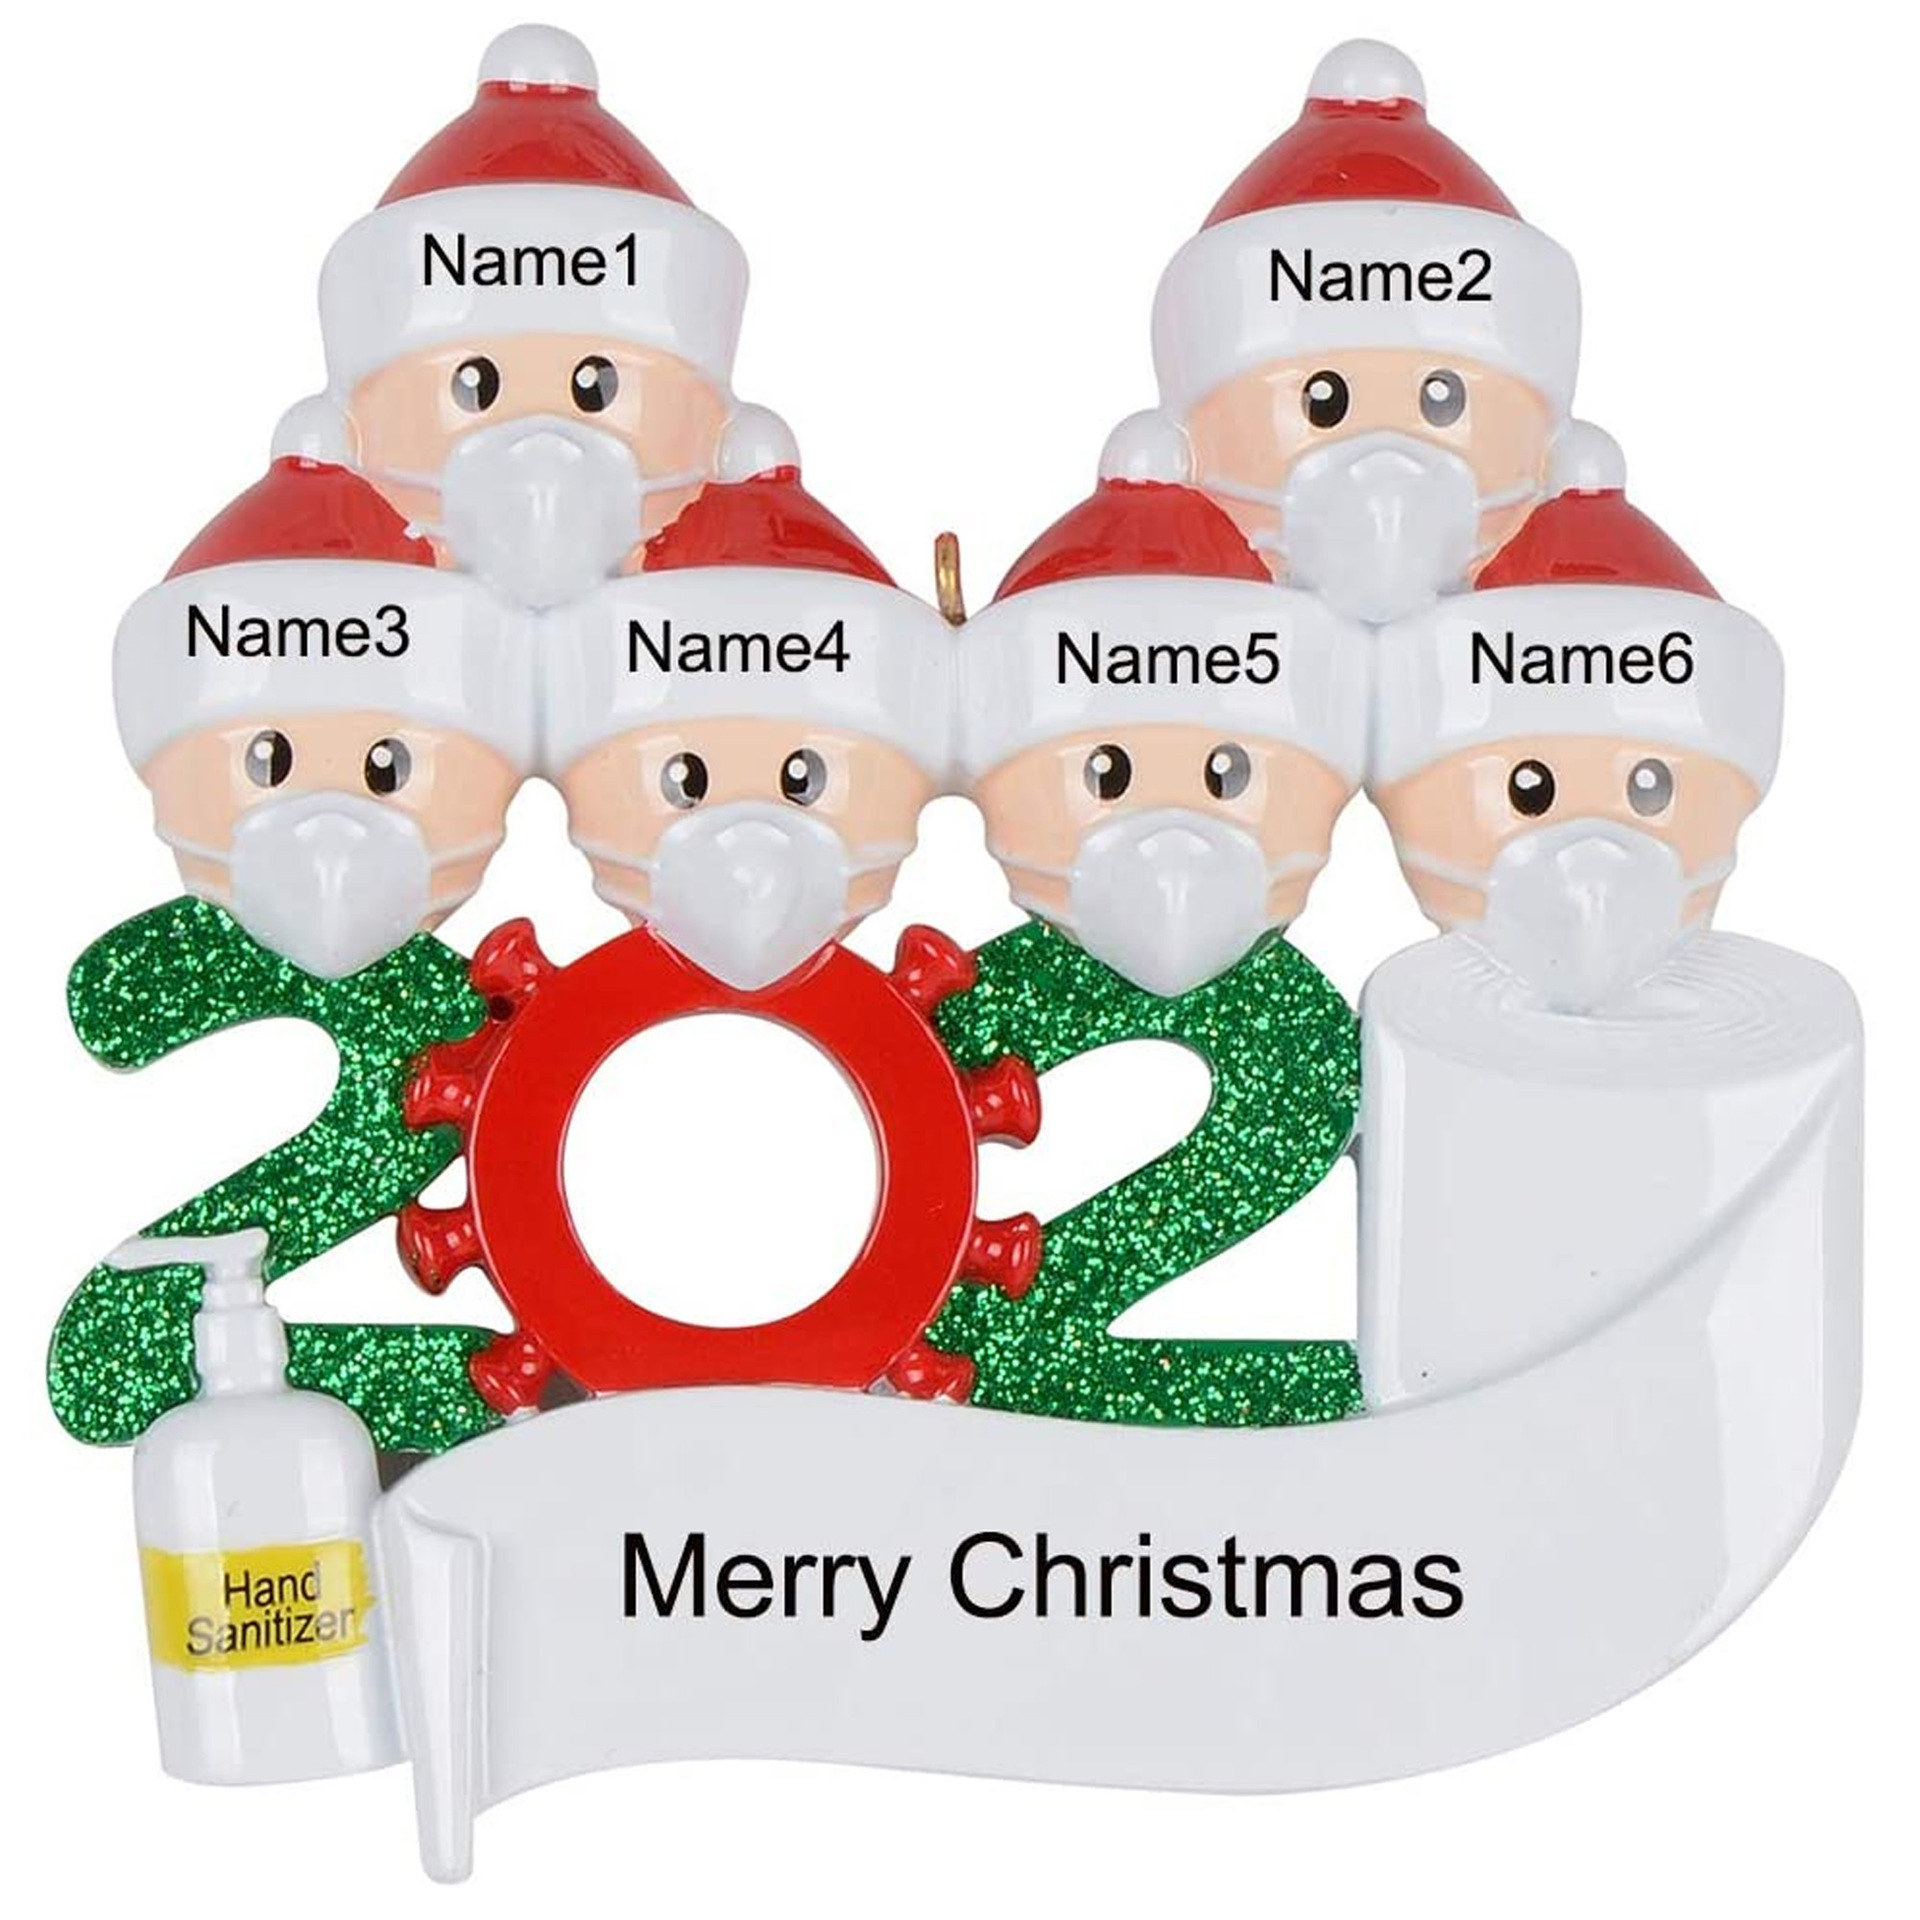 Christmas-Decorations-Christmas-Tree-Mask-Santa-Snowman-Ornaments-New-Year-Decoration-1744642-2